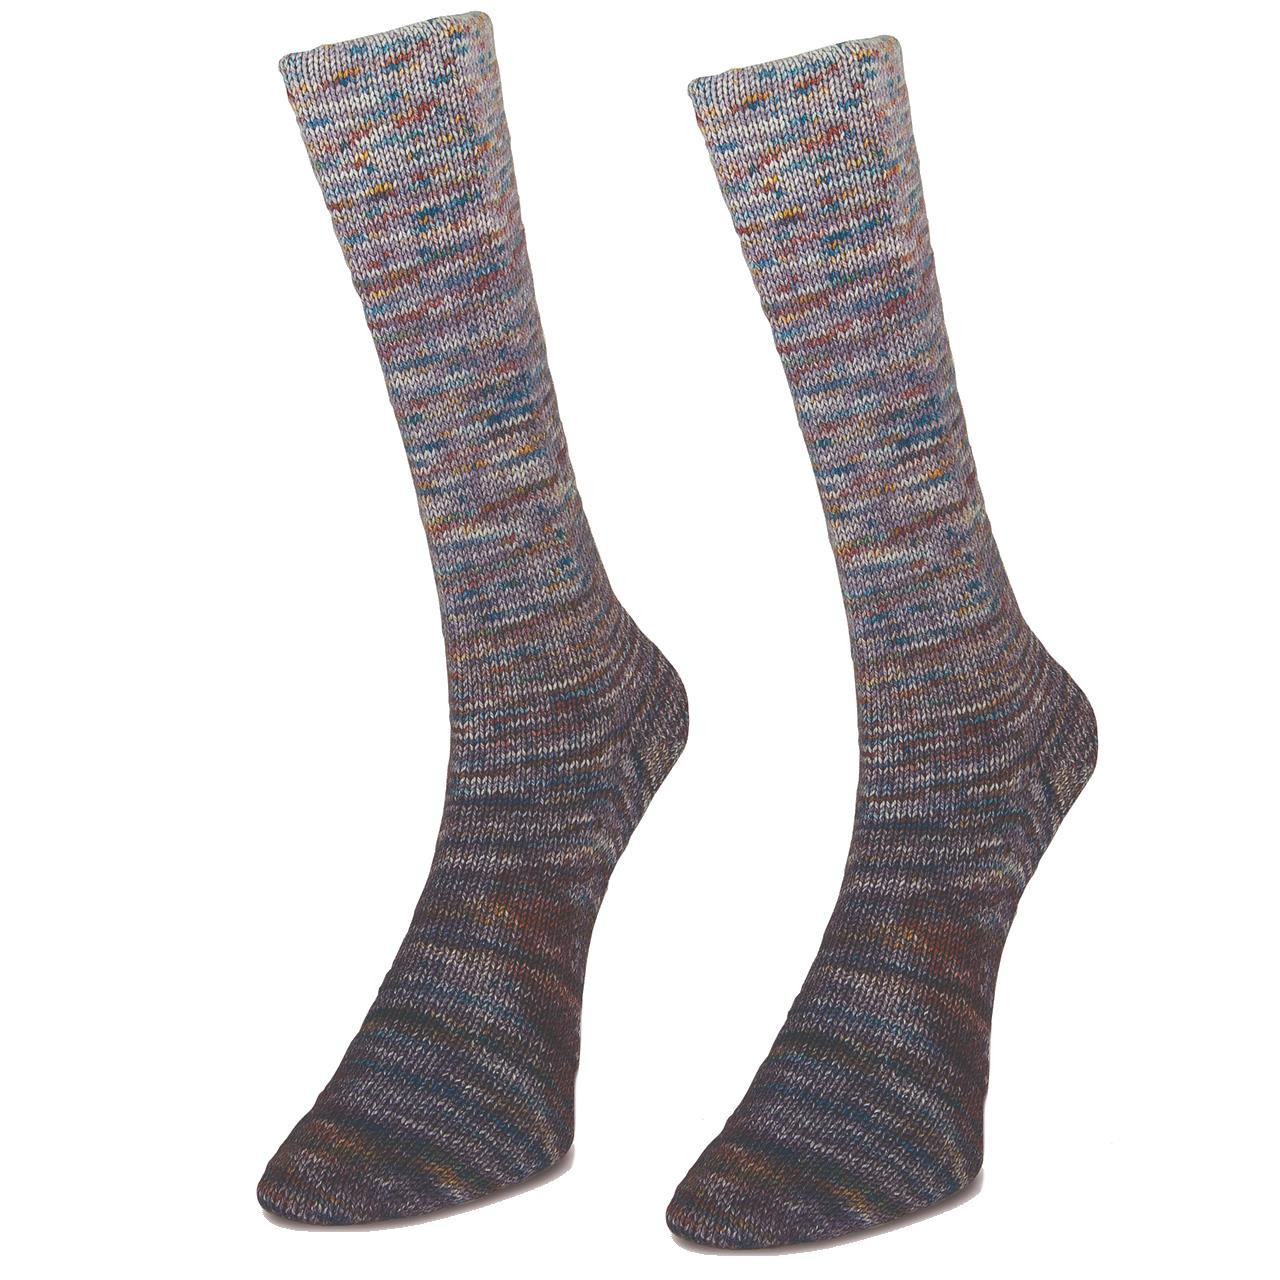 Gradient Yarn - MS Sock - 100 Grams – CHAOS Fiber Co